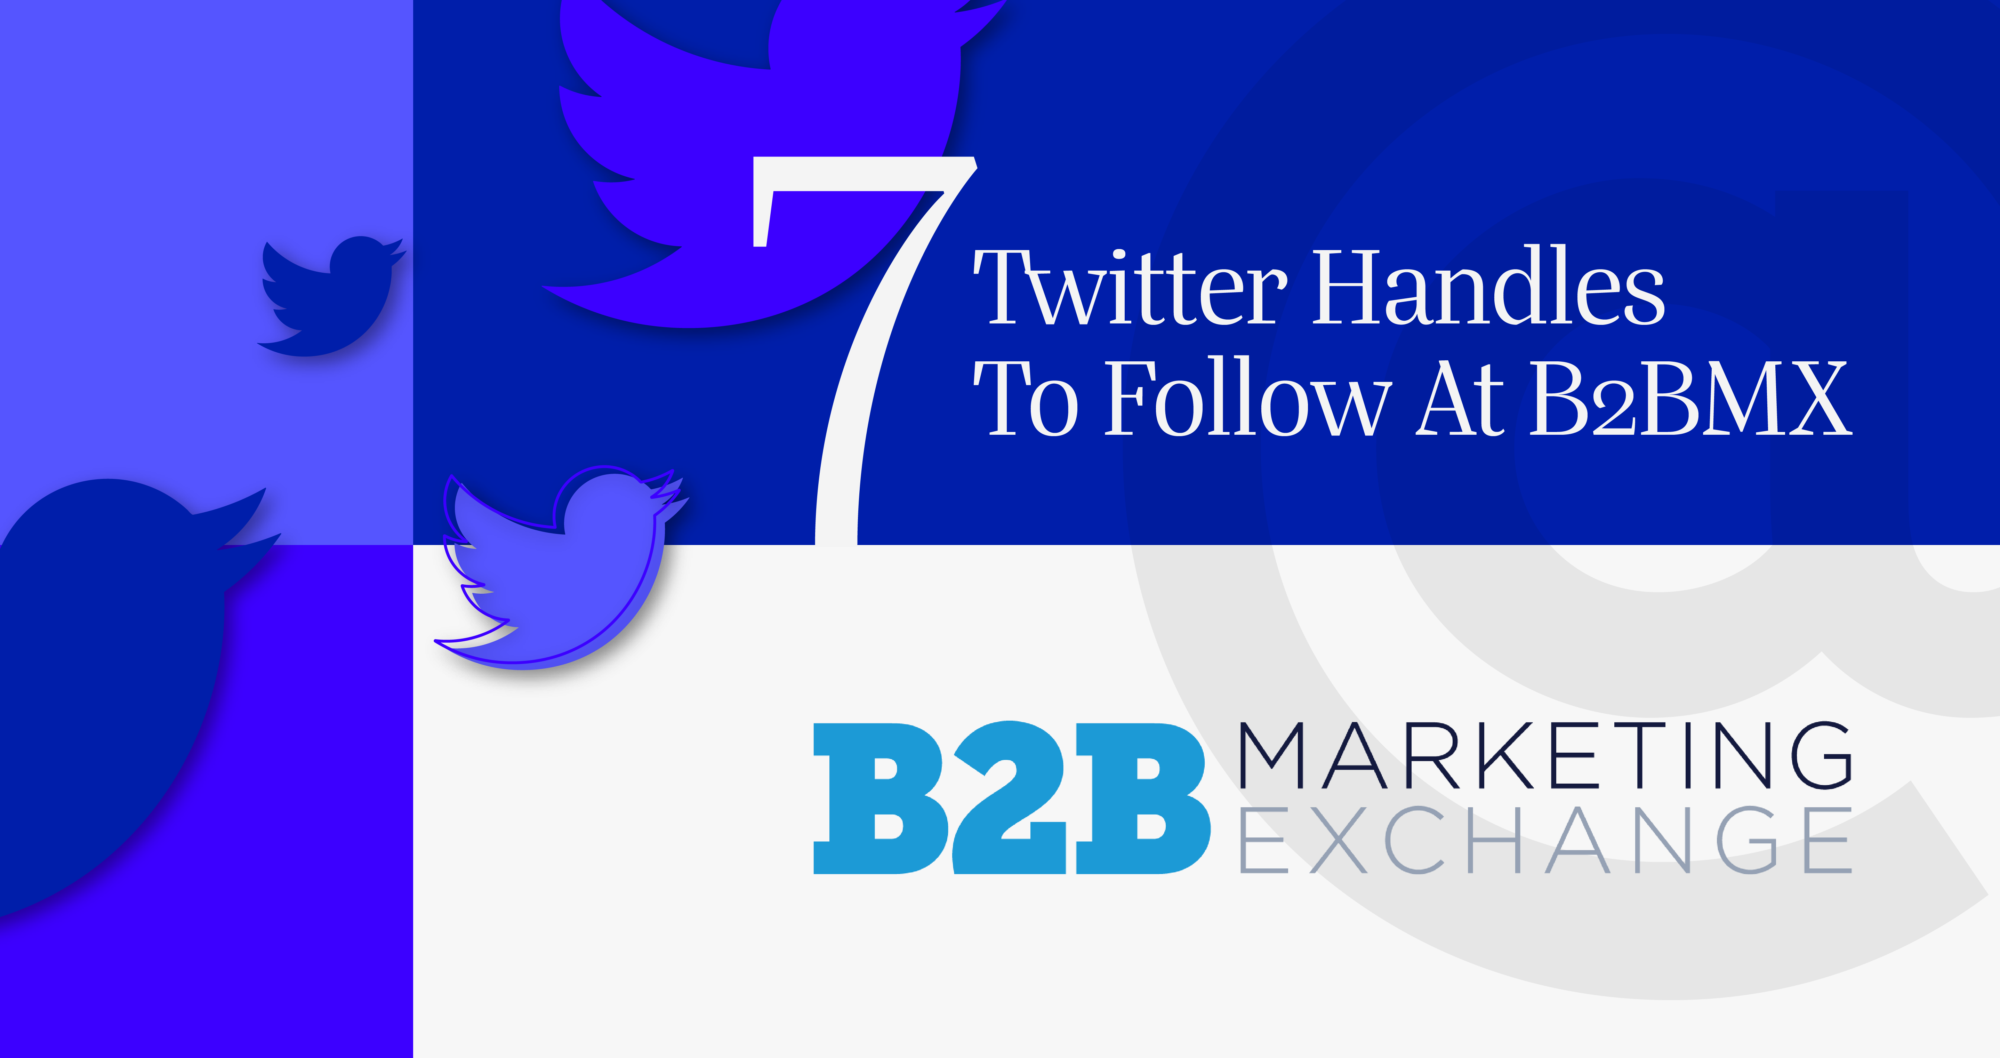 7 Twitter Handles to Follow at B2BMX, B2B Marketing Exchange